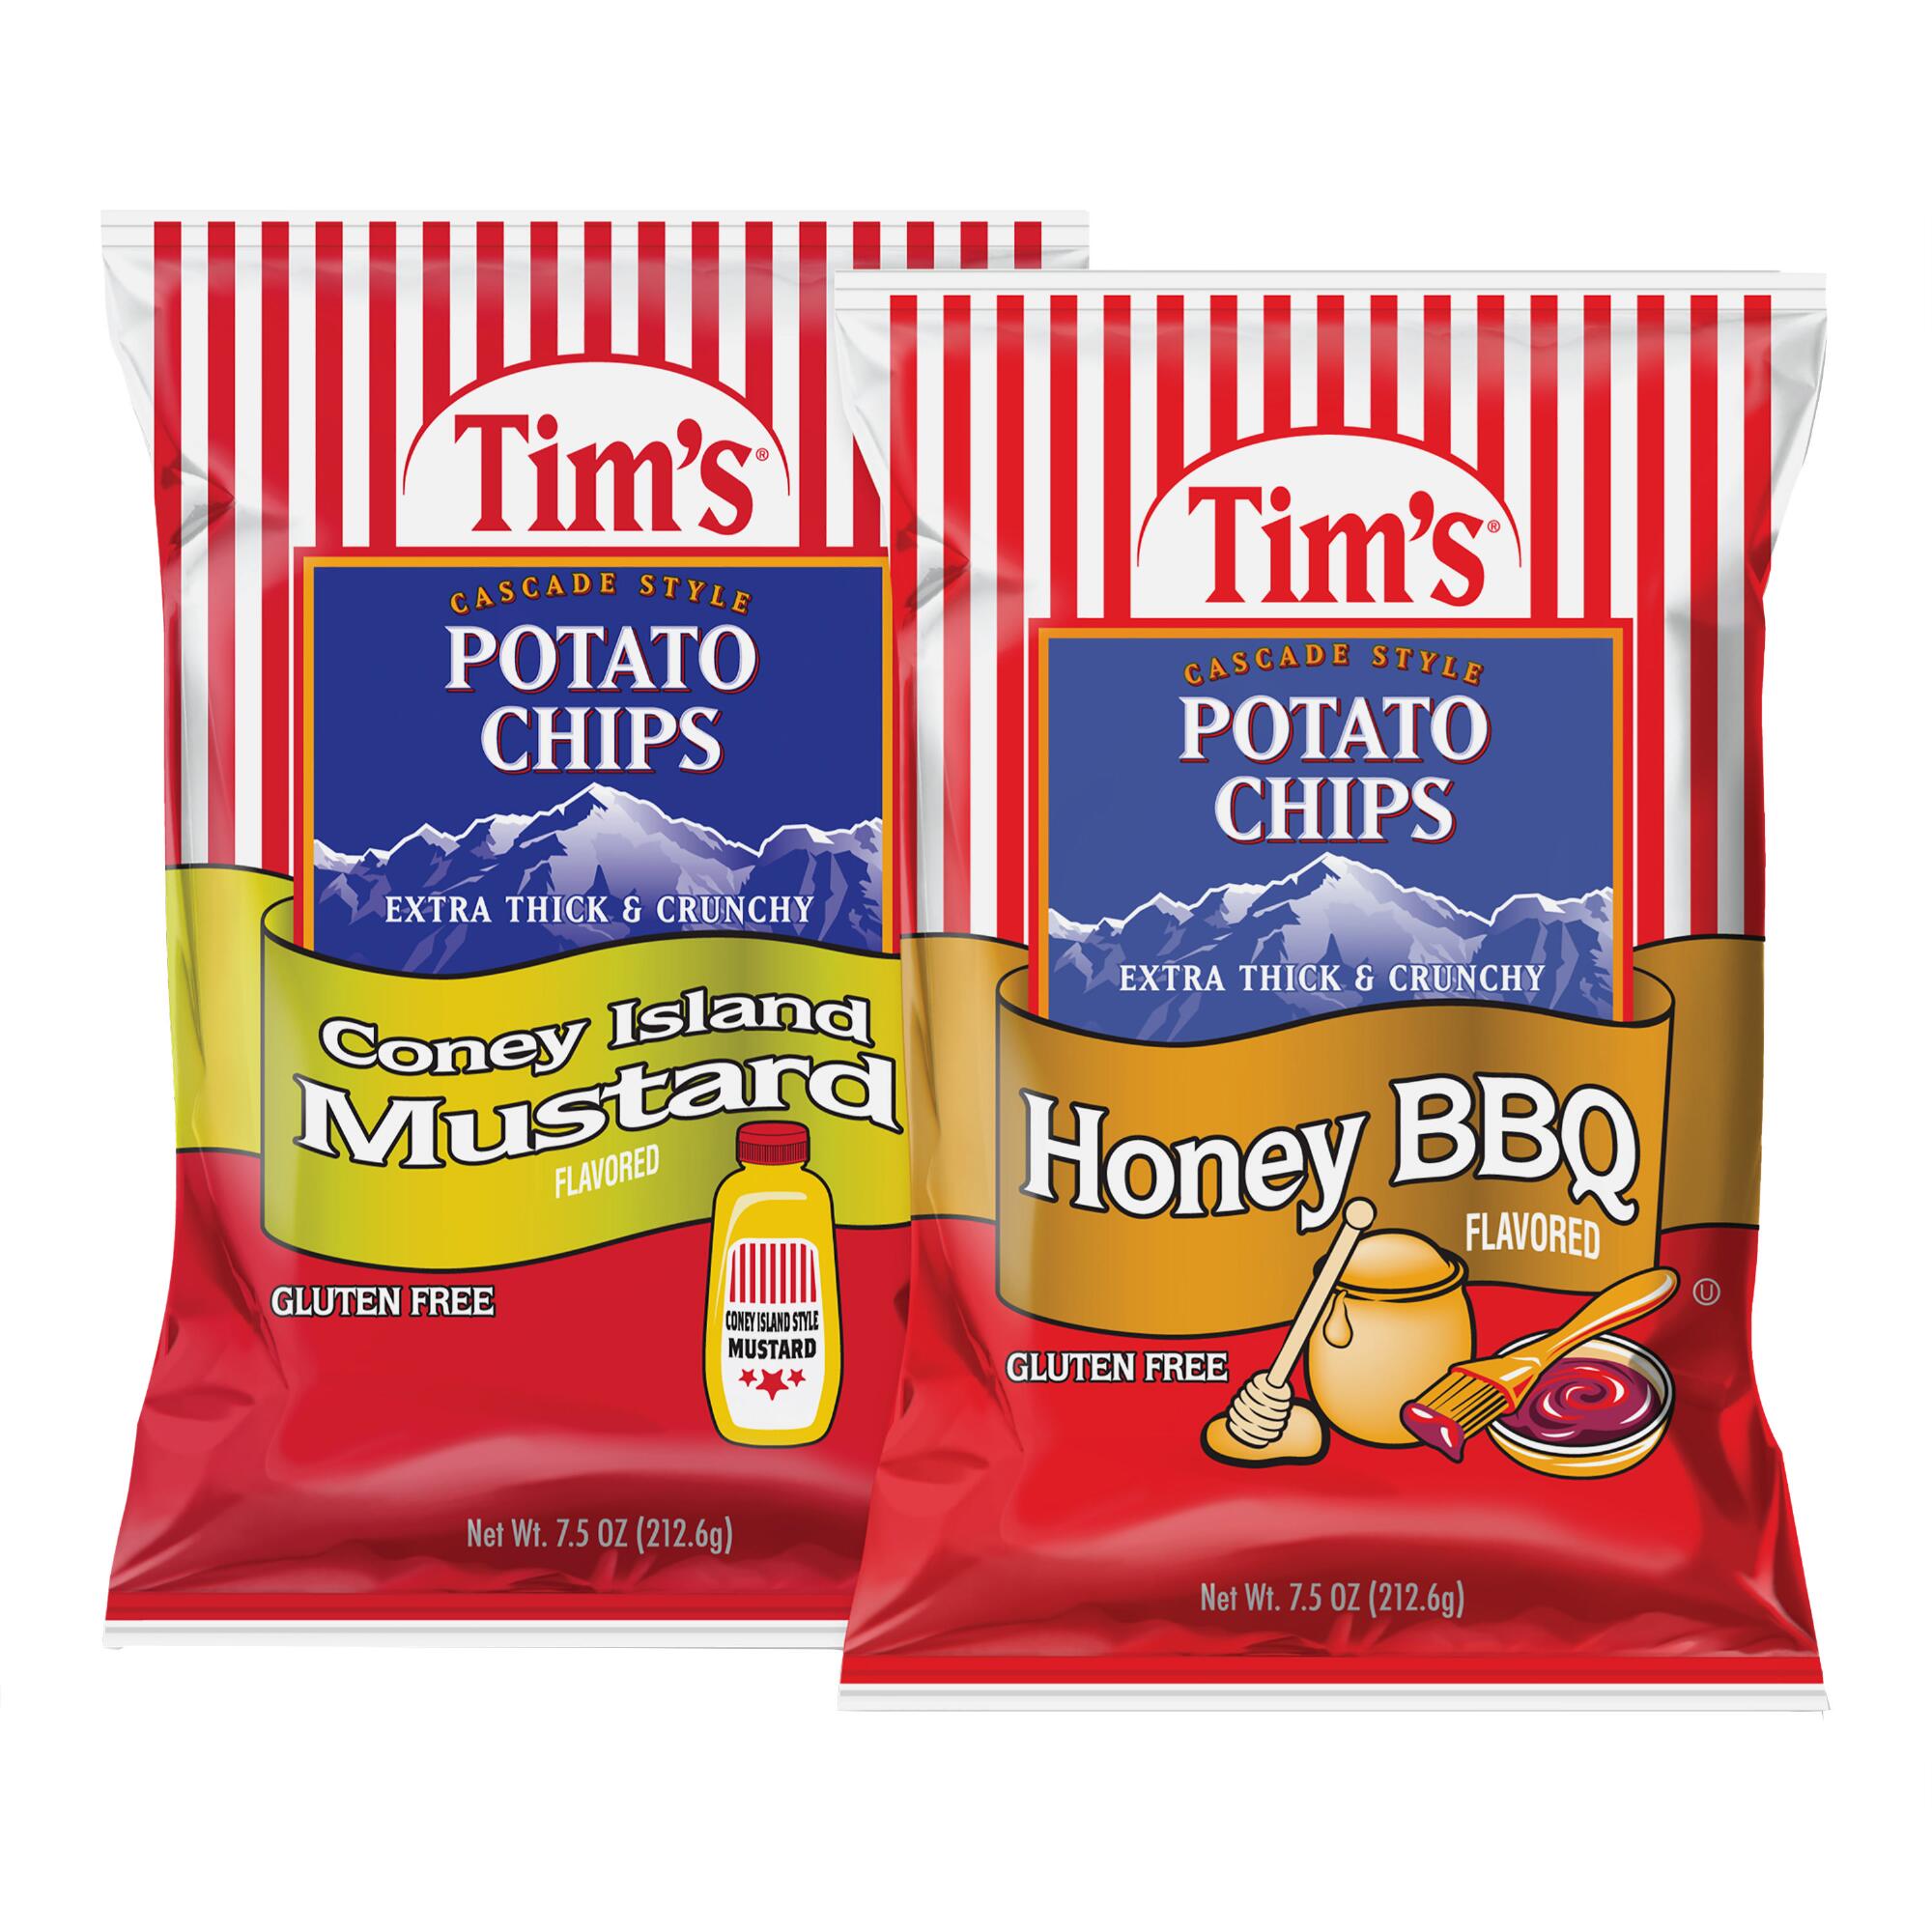 Tim's Cascade Style Potato Chip Collection by World Market